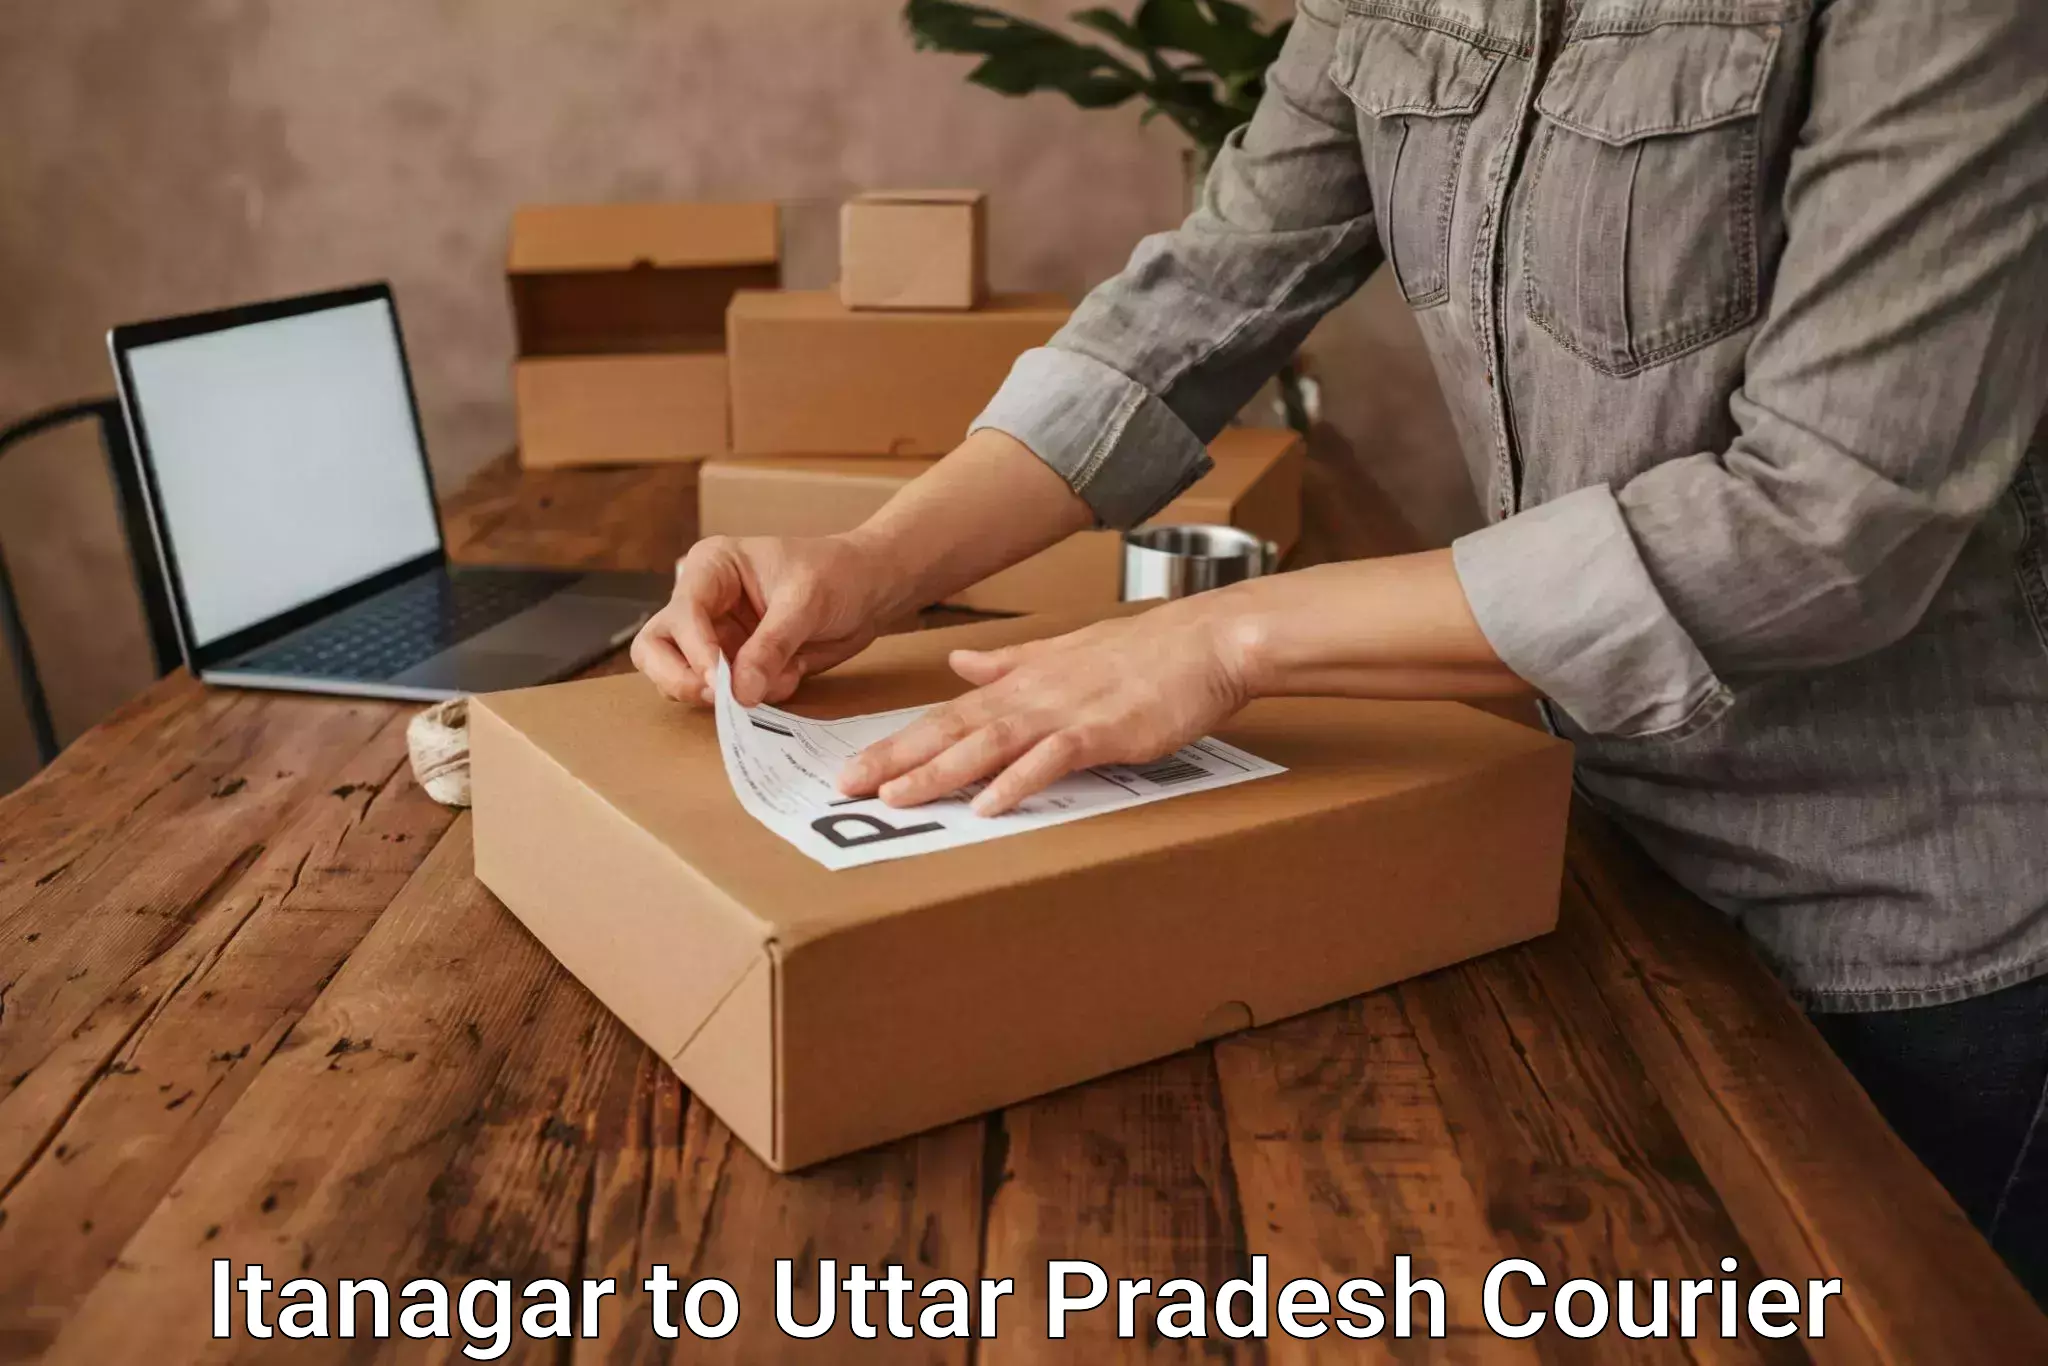 Courier service efficiency Itanagar to Lucknow